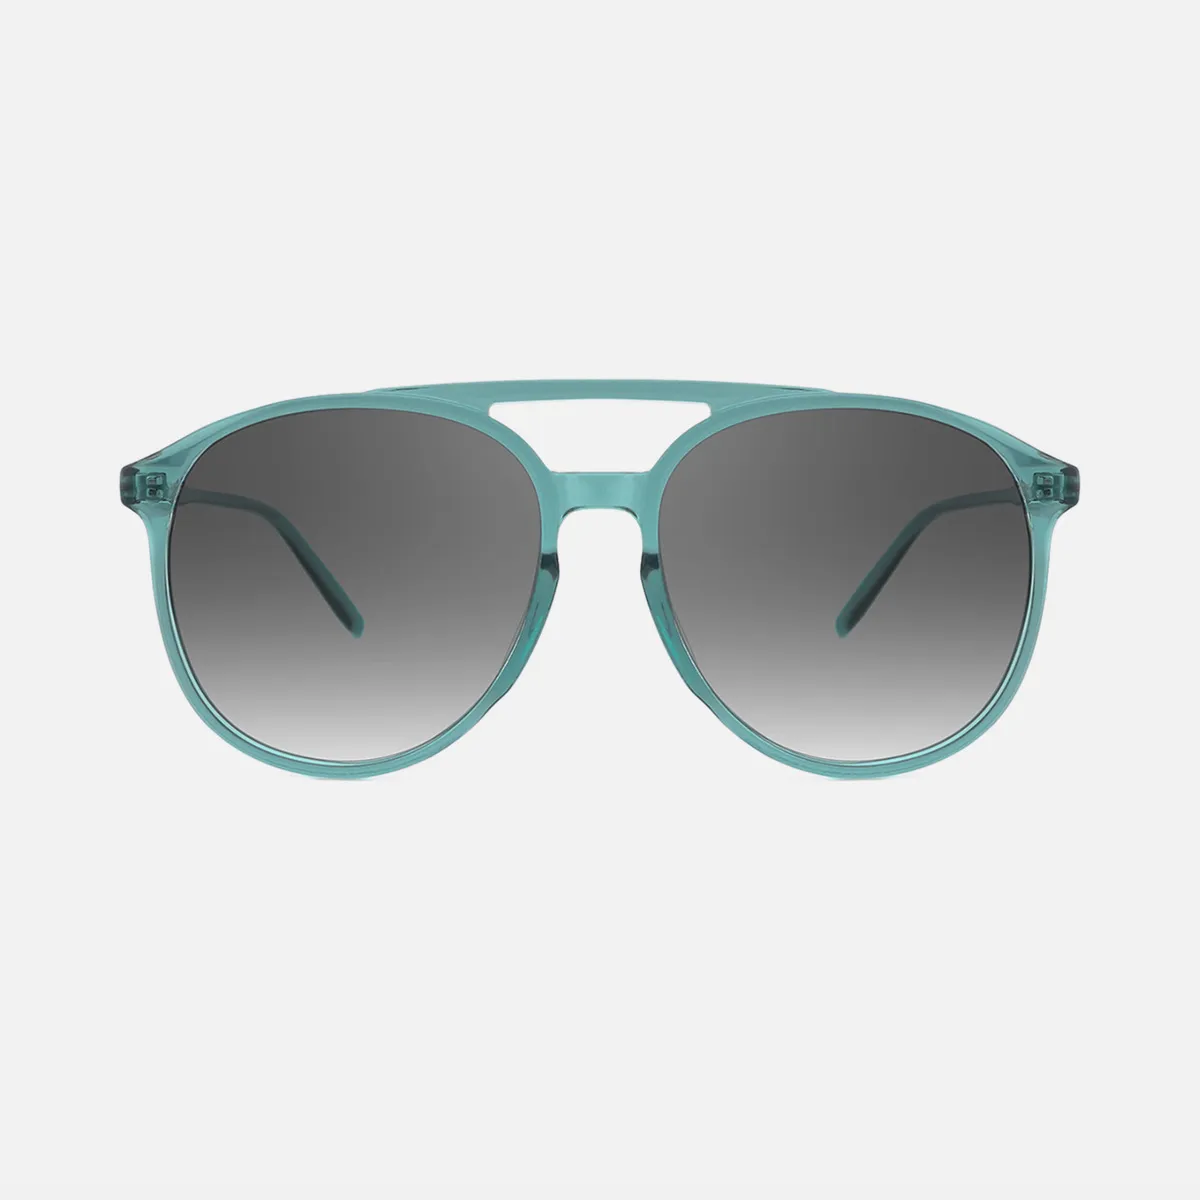 Hemera Sunglasses in Transparent Grey